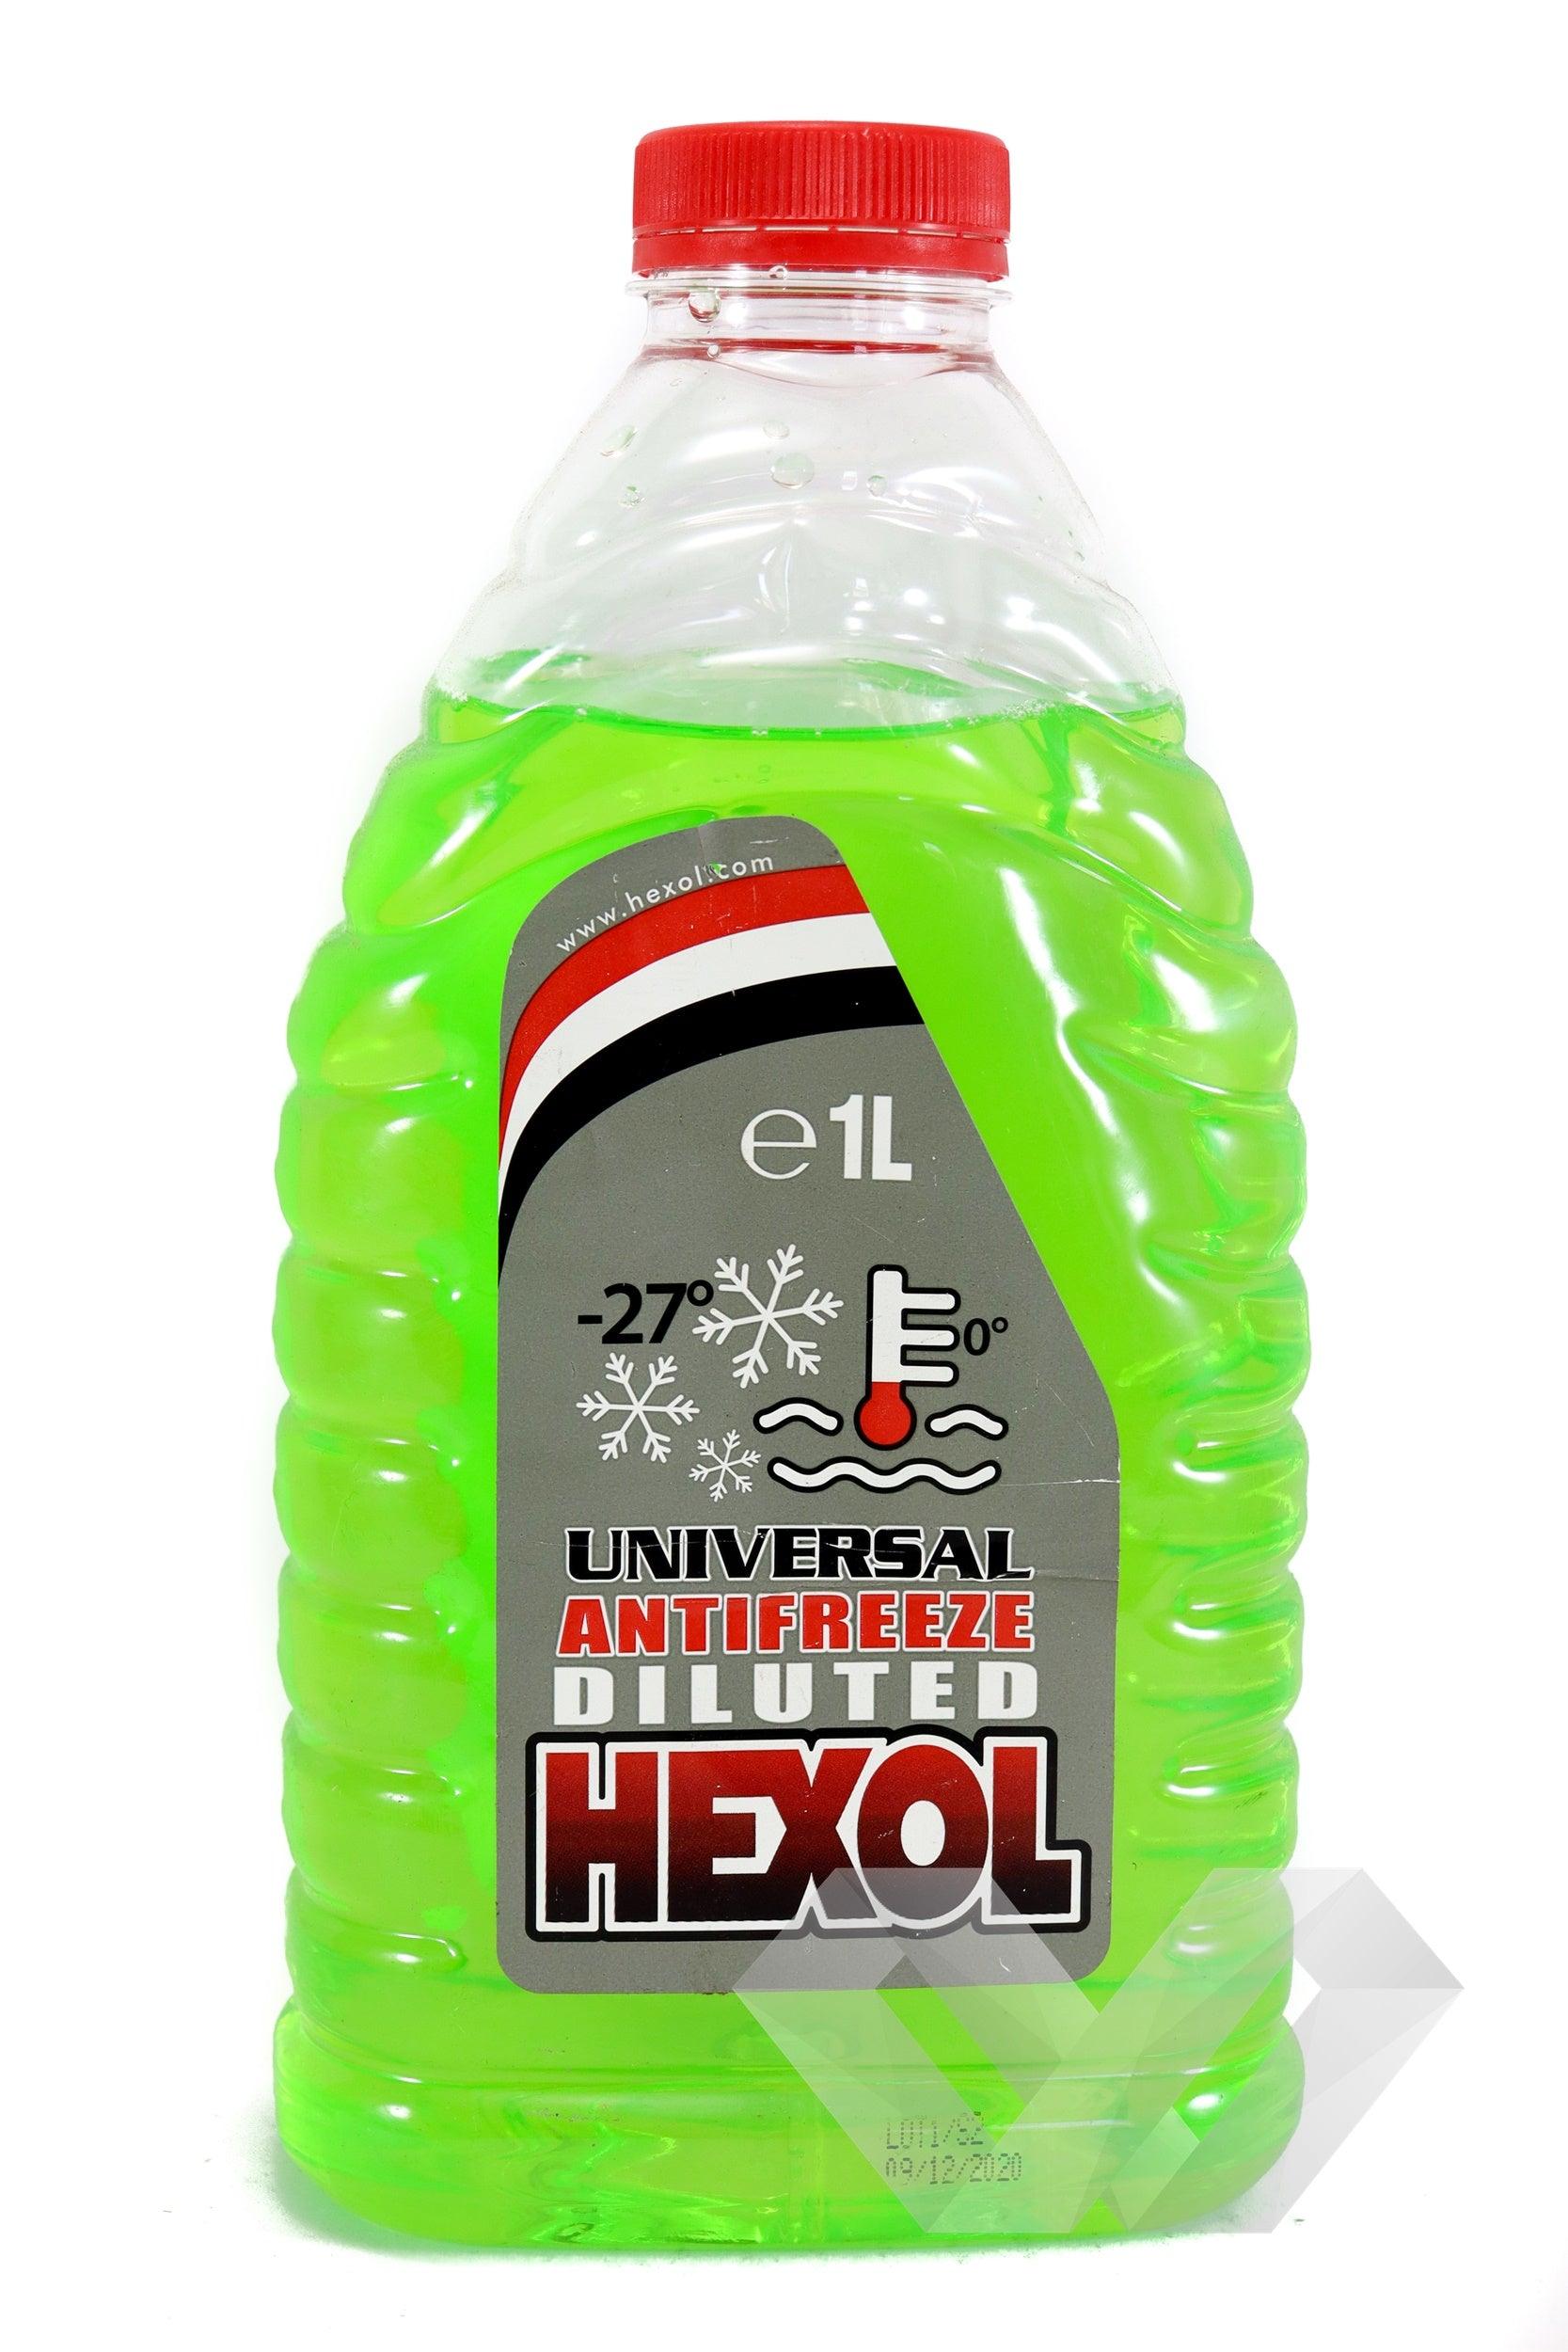 Antigel verde G11 diluat Hexol, -27°C, 1L - EWO Market